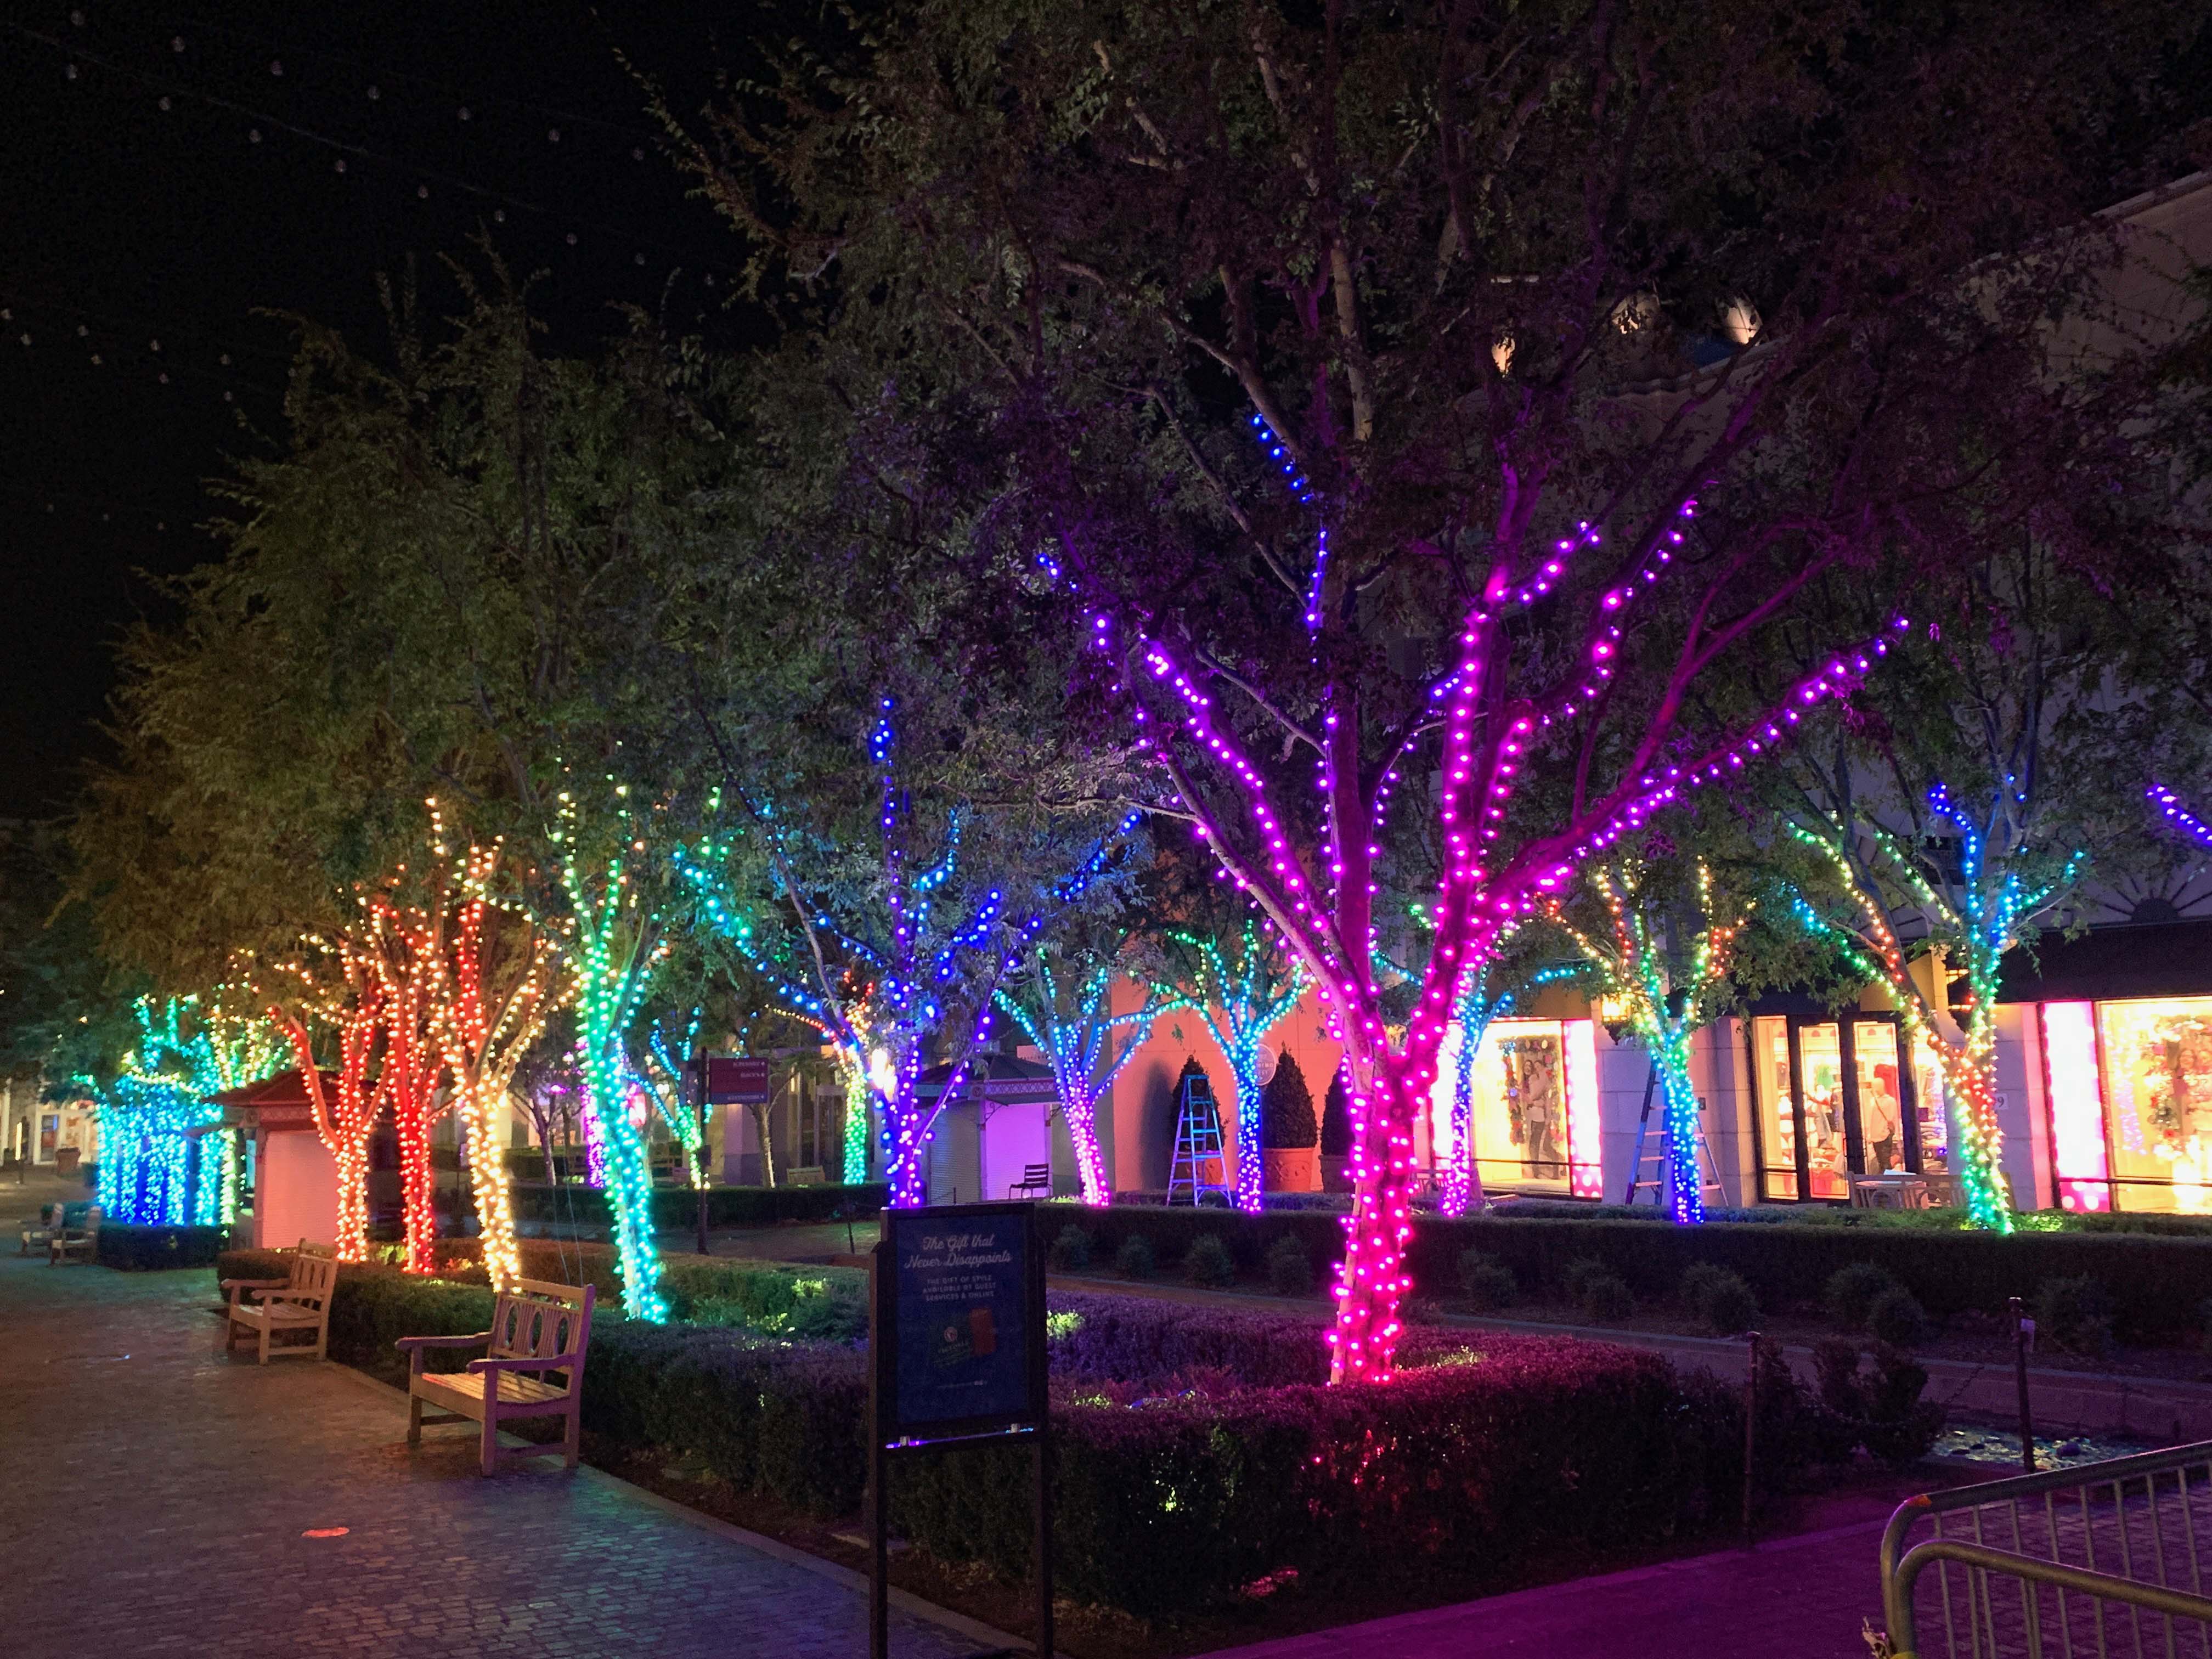 ❄🎄 Magical Light Show at Victoria Gardens